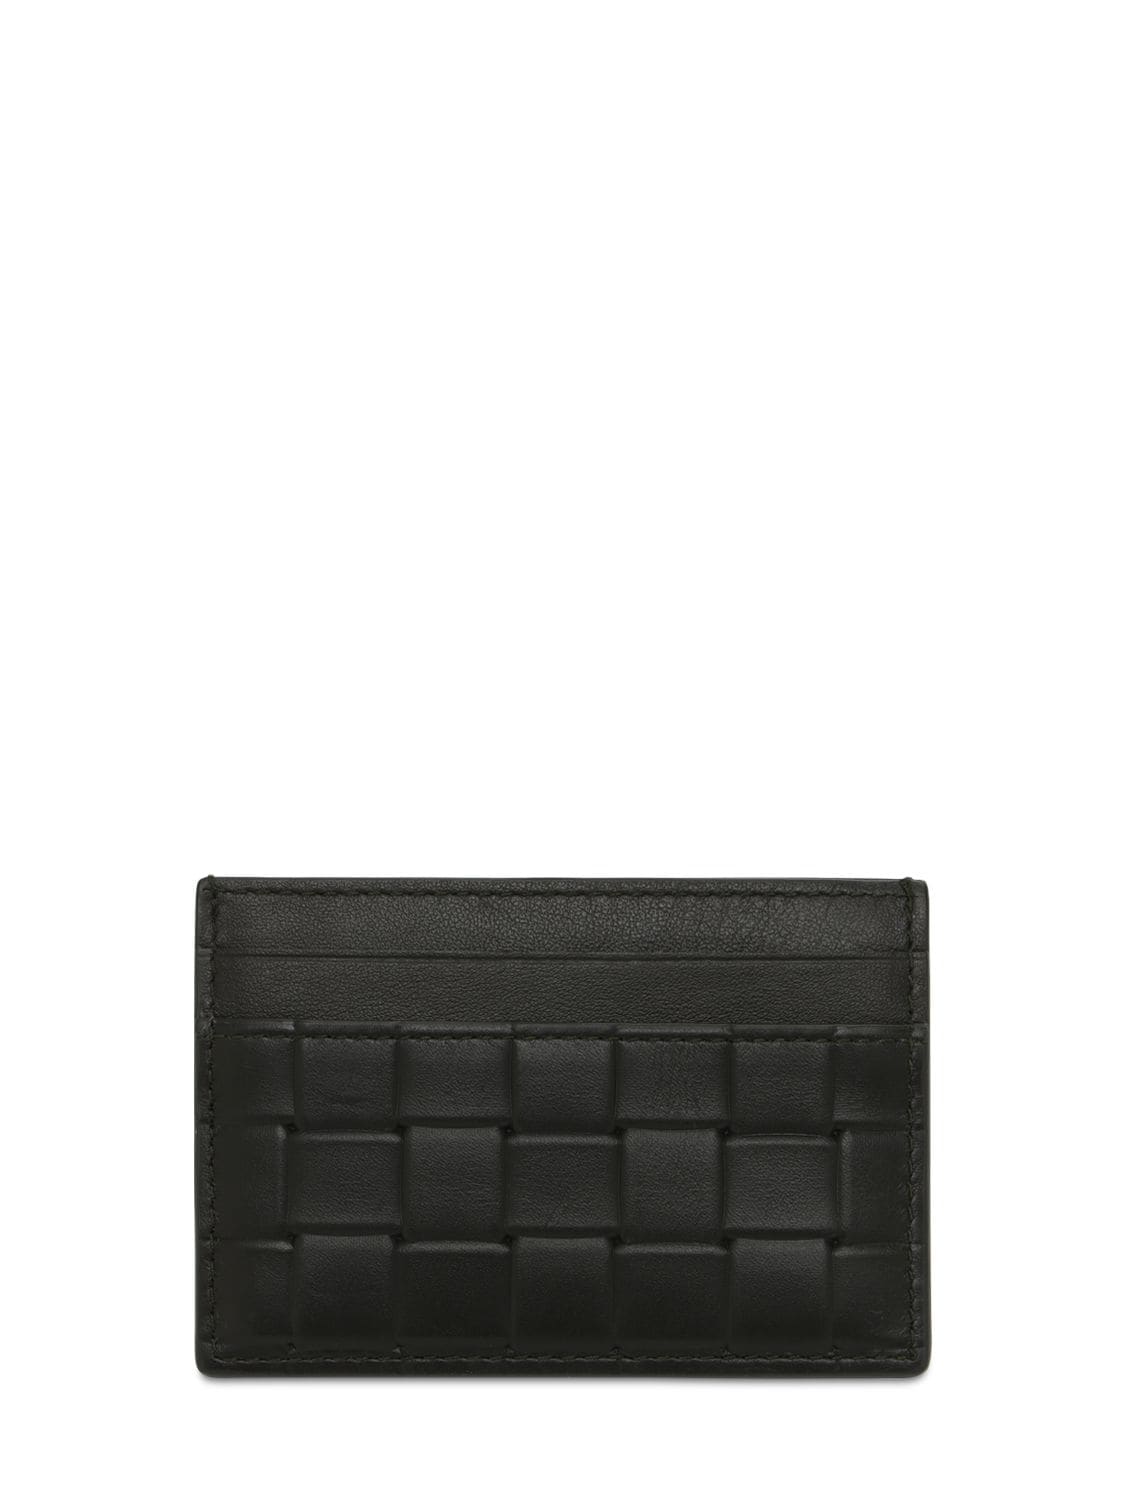 Bottega Veneta Intreccio Embossed Leather Card Holder In Black/silver